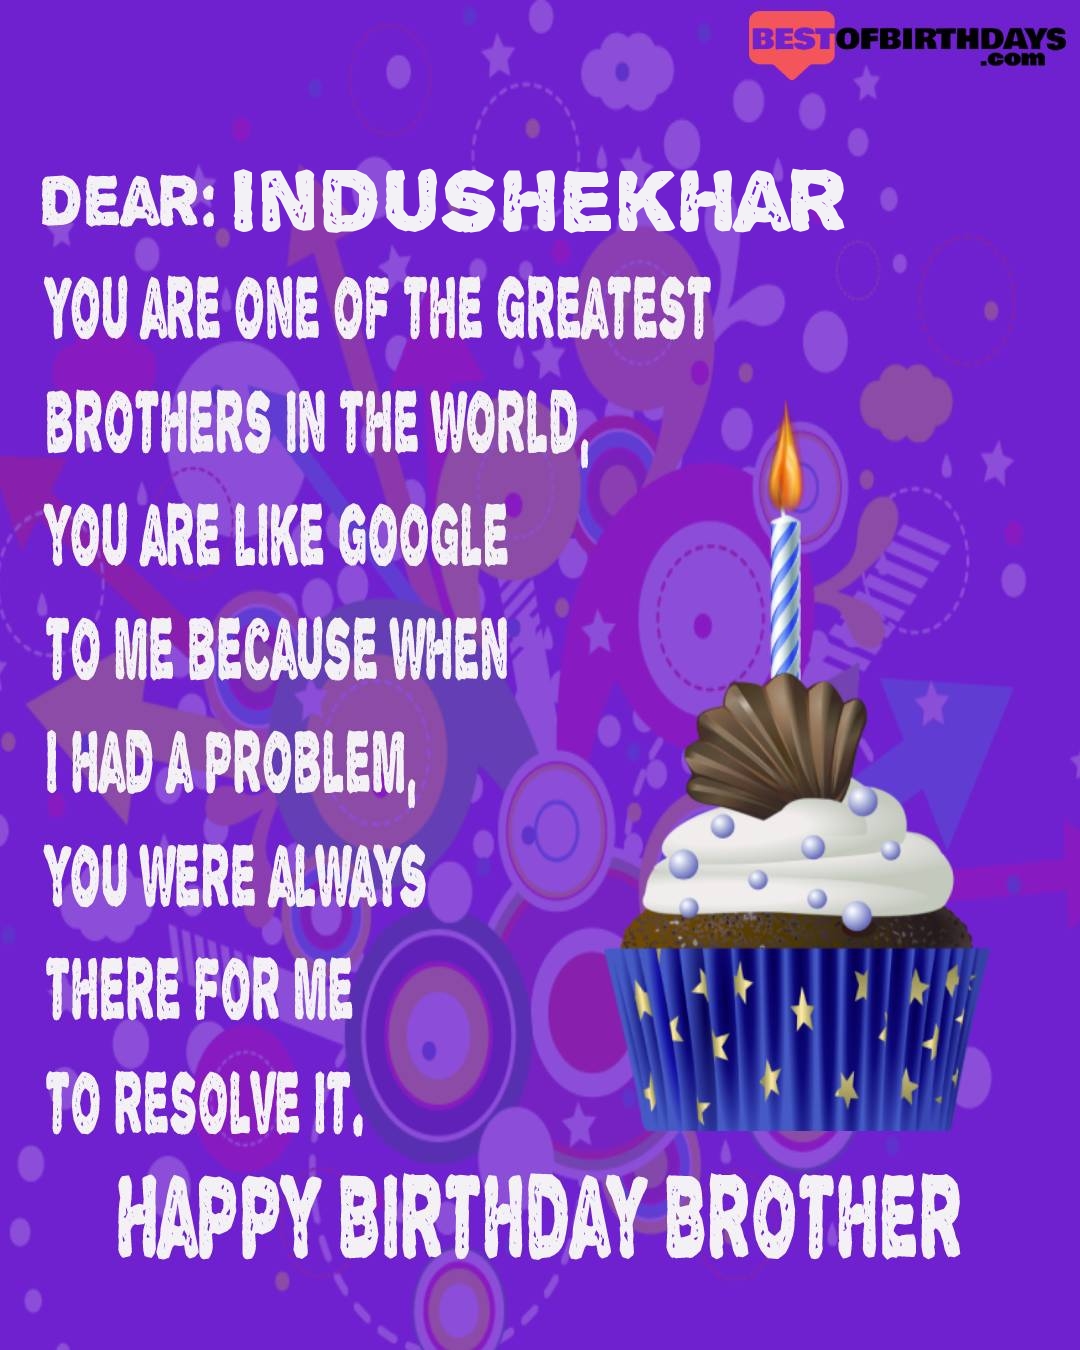 Happy birthday indushekhar bhai brother bro